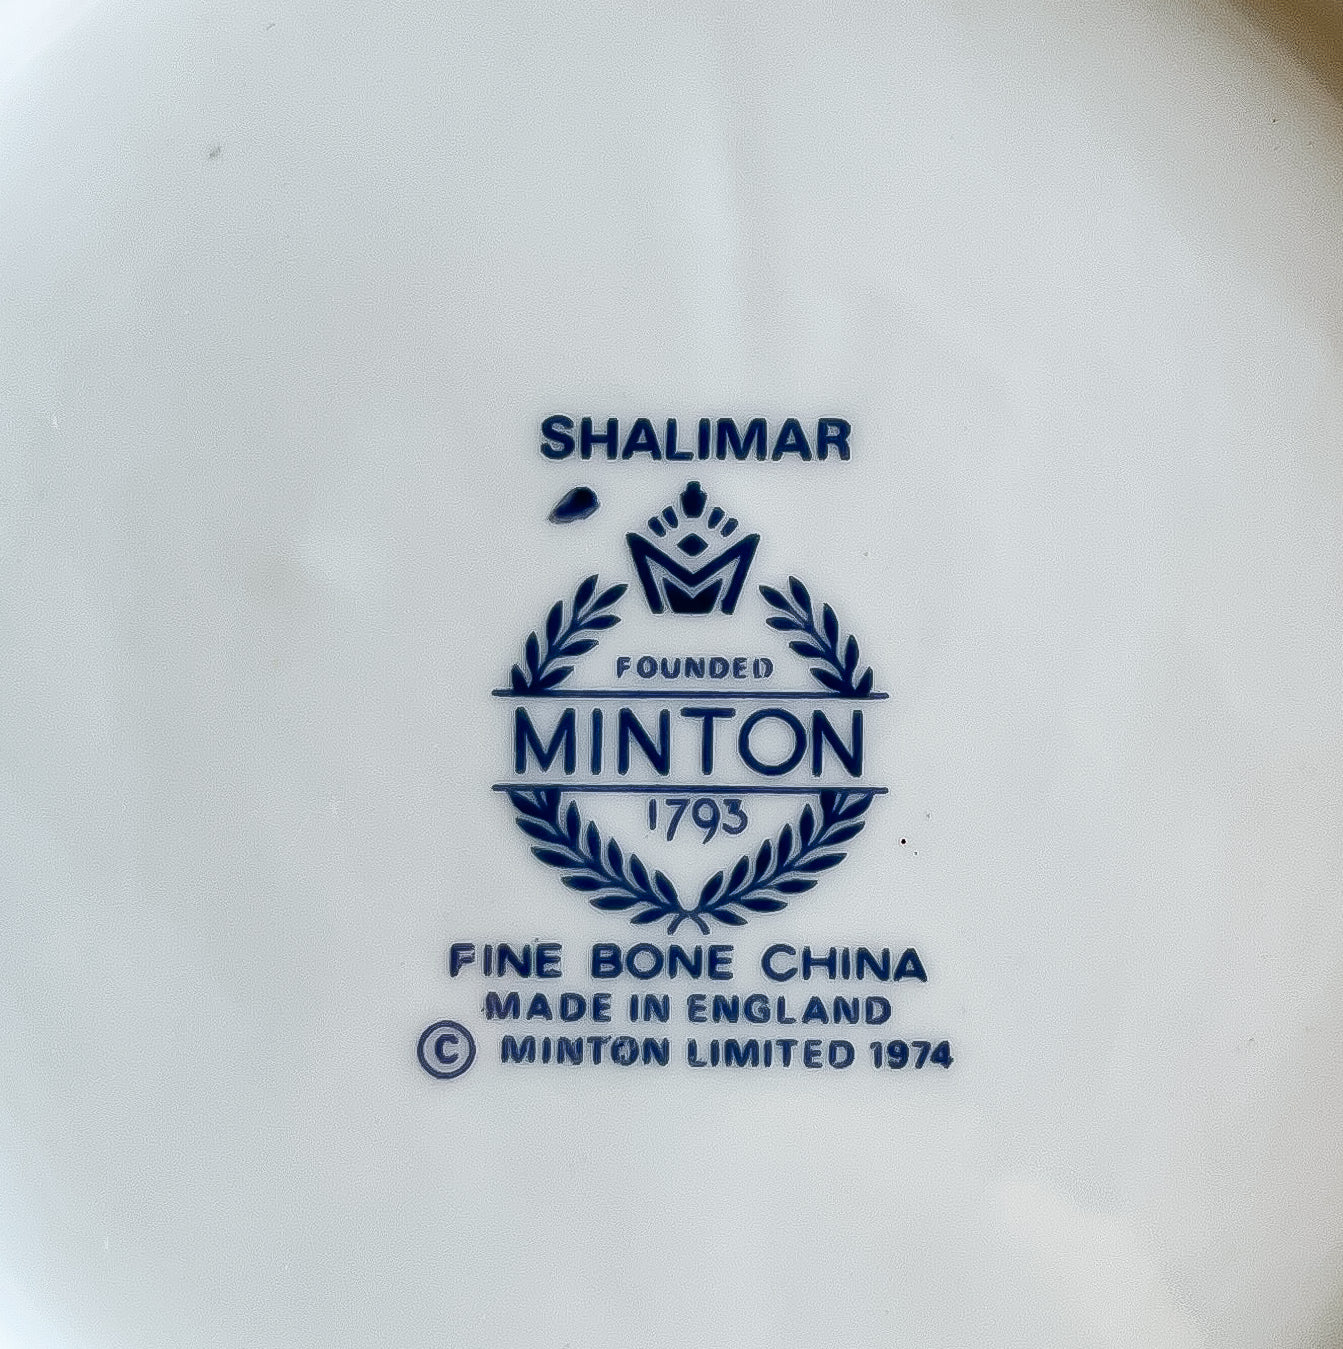 Pair of Elegant Minton Vases - 'Shalimar' Collection